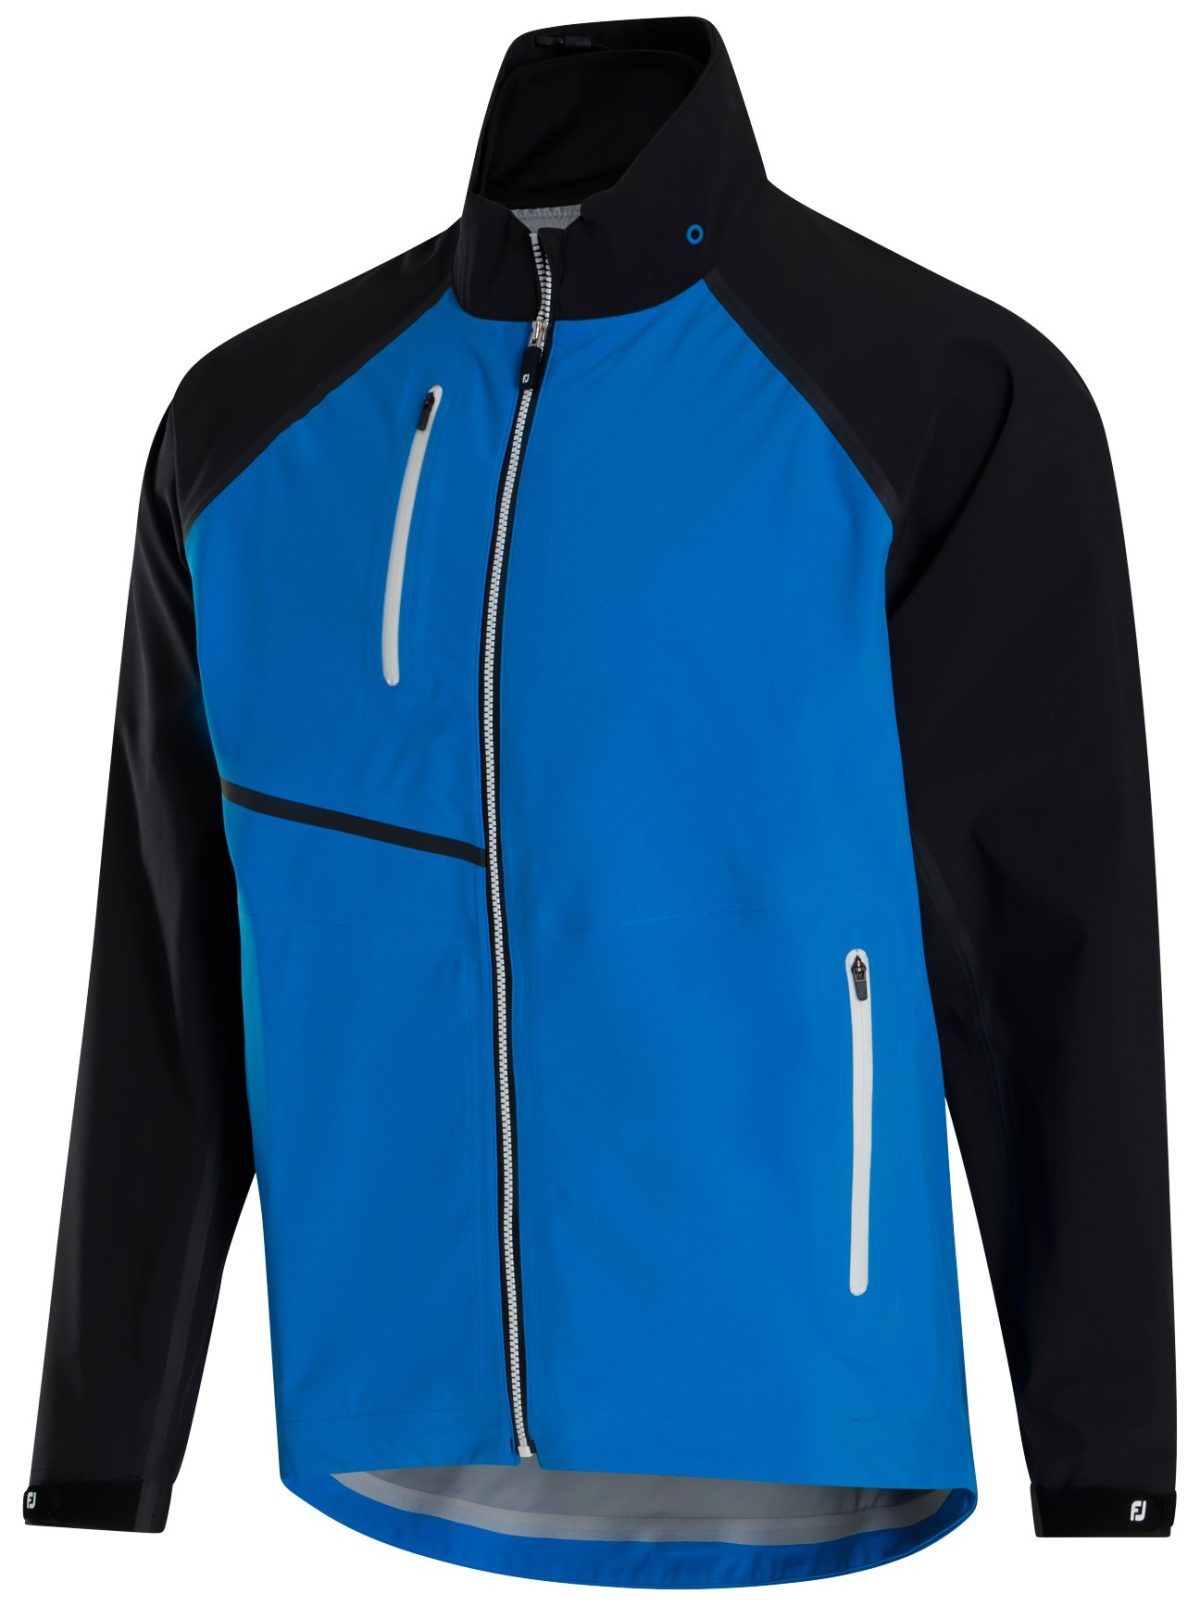 FootJoy Men's Hydrotour Golf Rain Jacket in Black/Blue, Size S